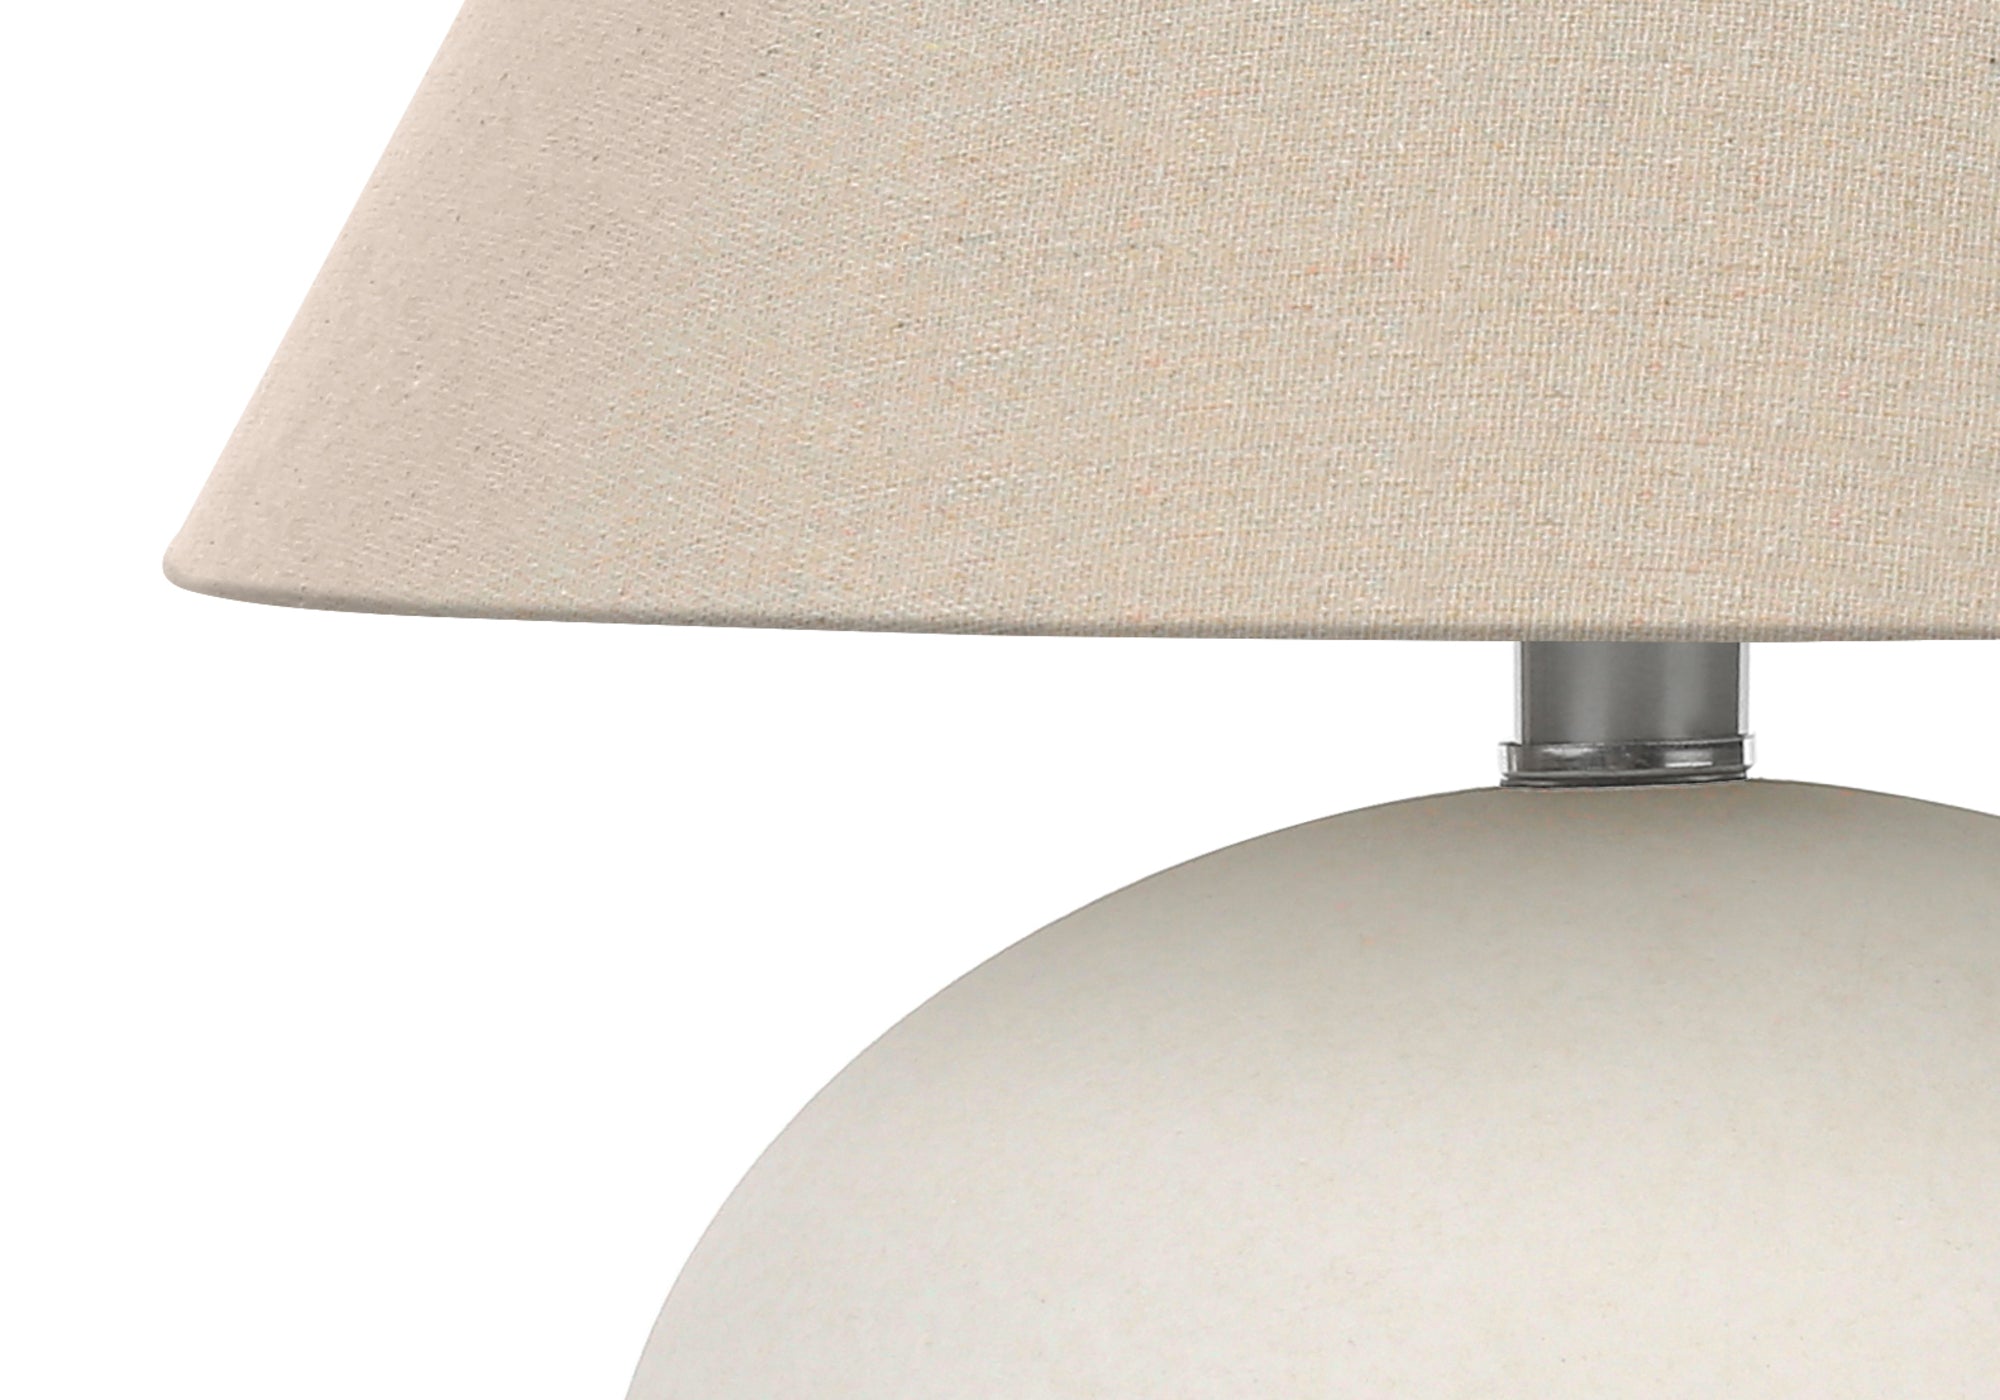 MN-139631    Lighting, 16"H, Table Lamp, Cream Shade, Cream Ceramic, Contemporary